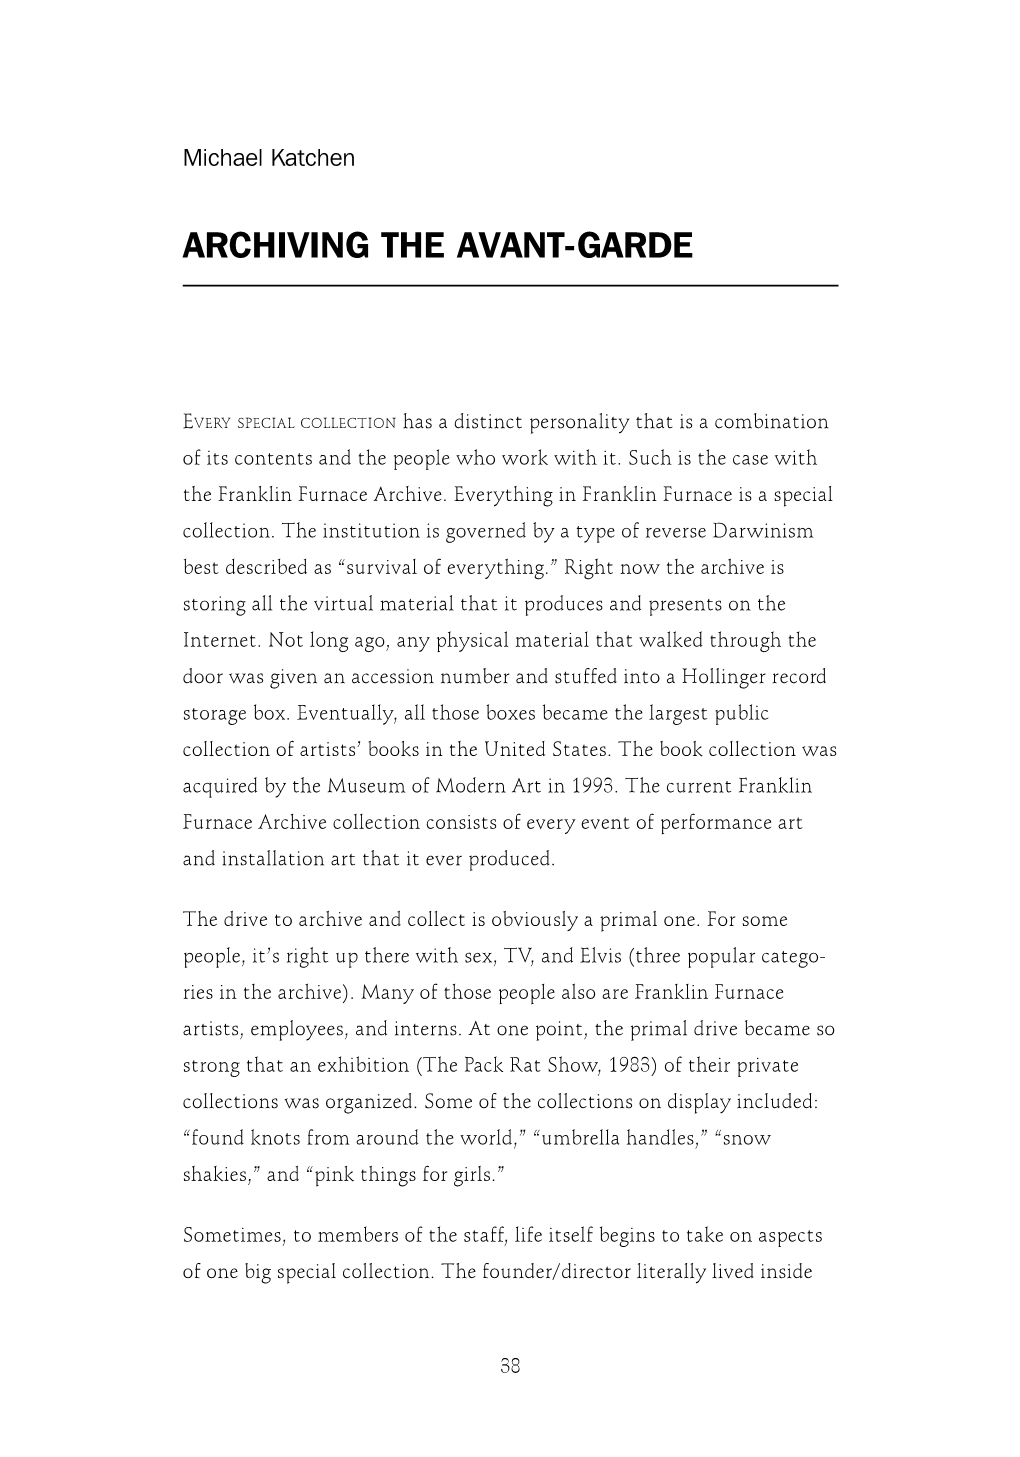 Archiving the Avant Garde